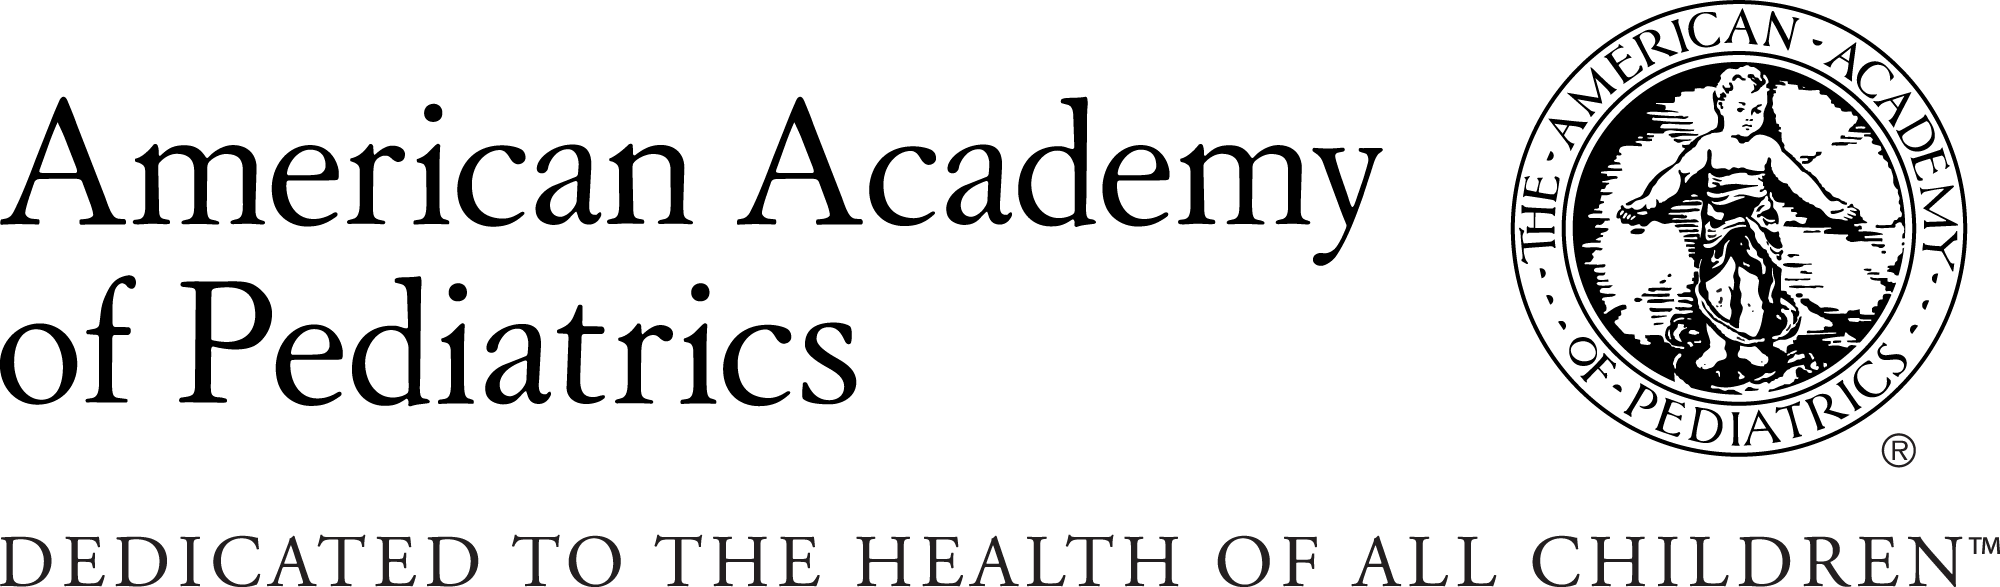 american academy of pediatrics logo